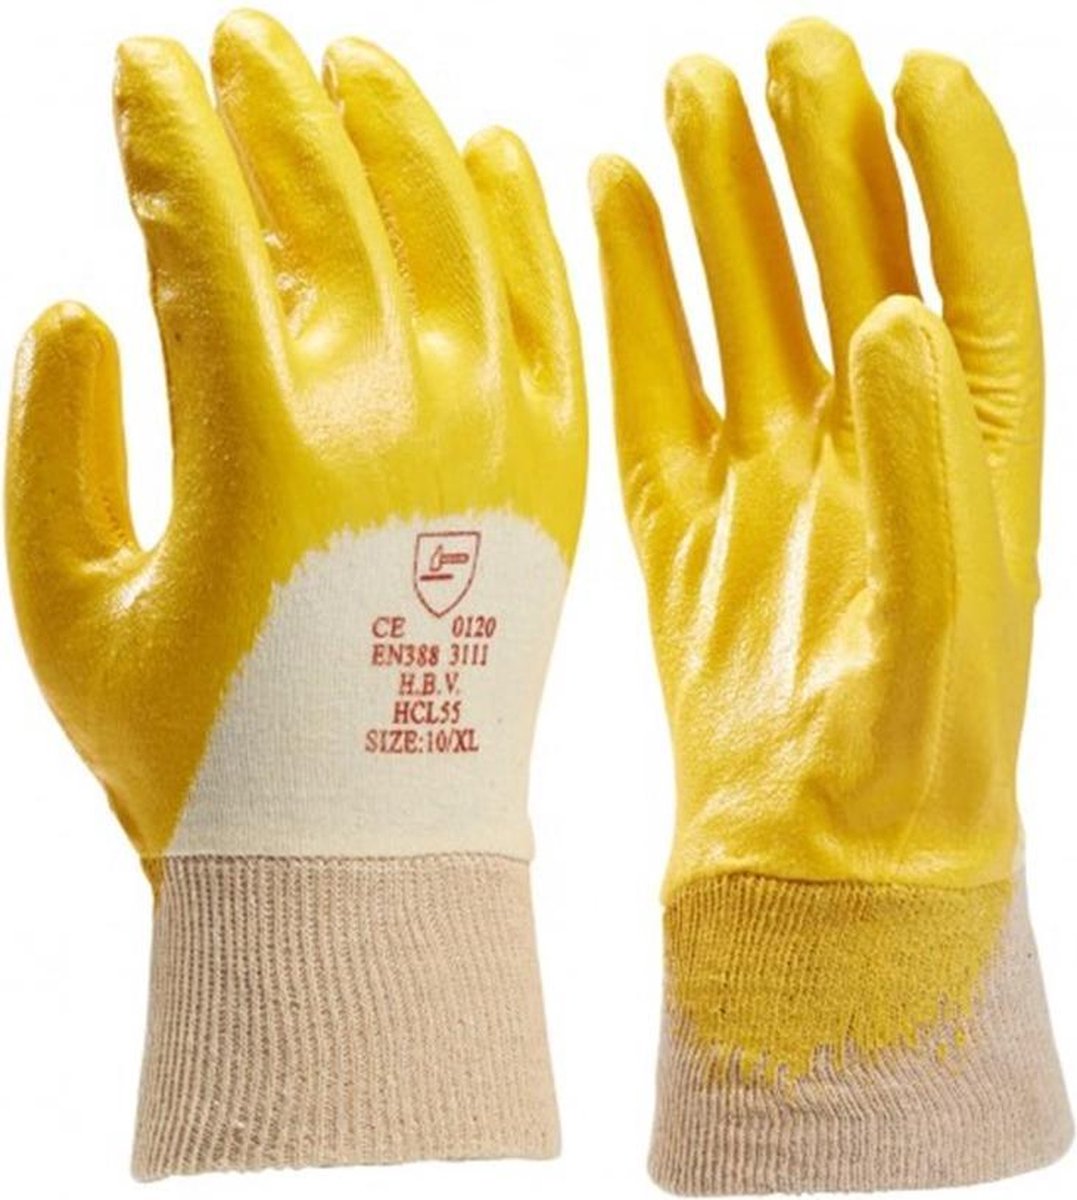 HCL55 NBR Werkhandschoenen HBV - Maat L - Nitril Handschoenen